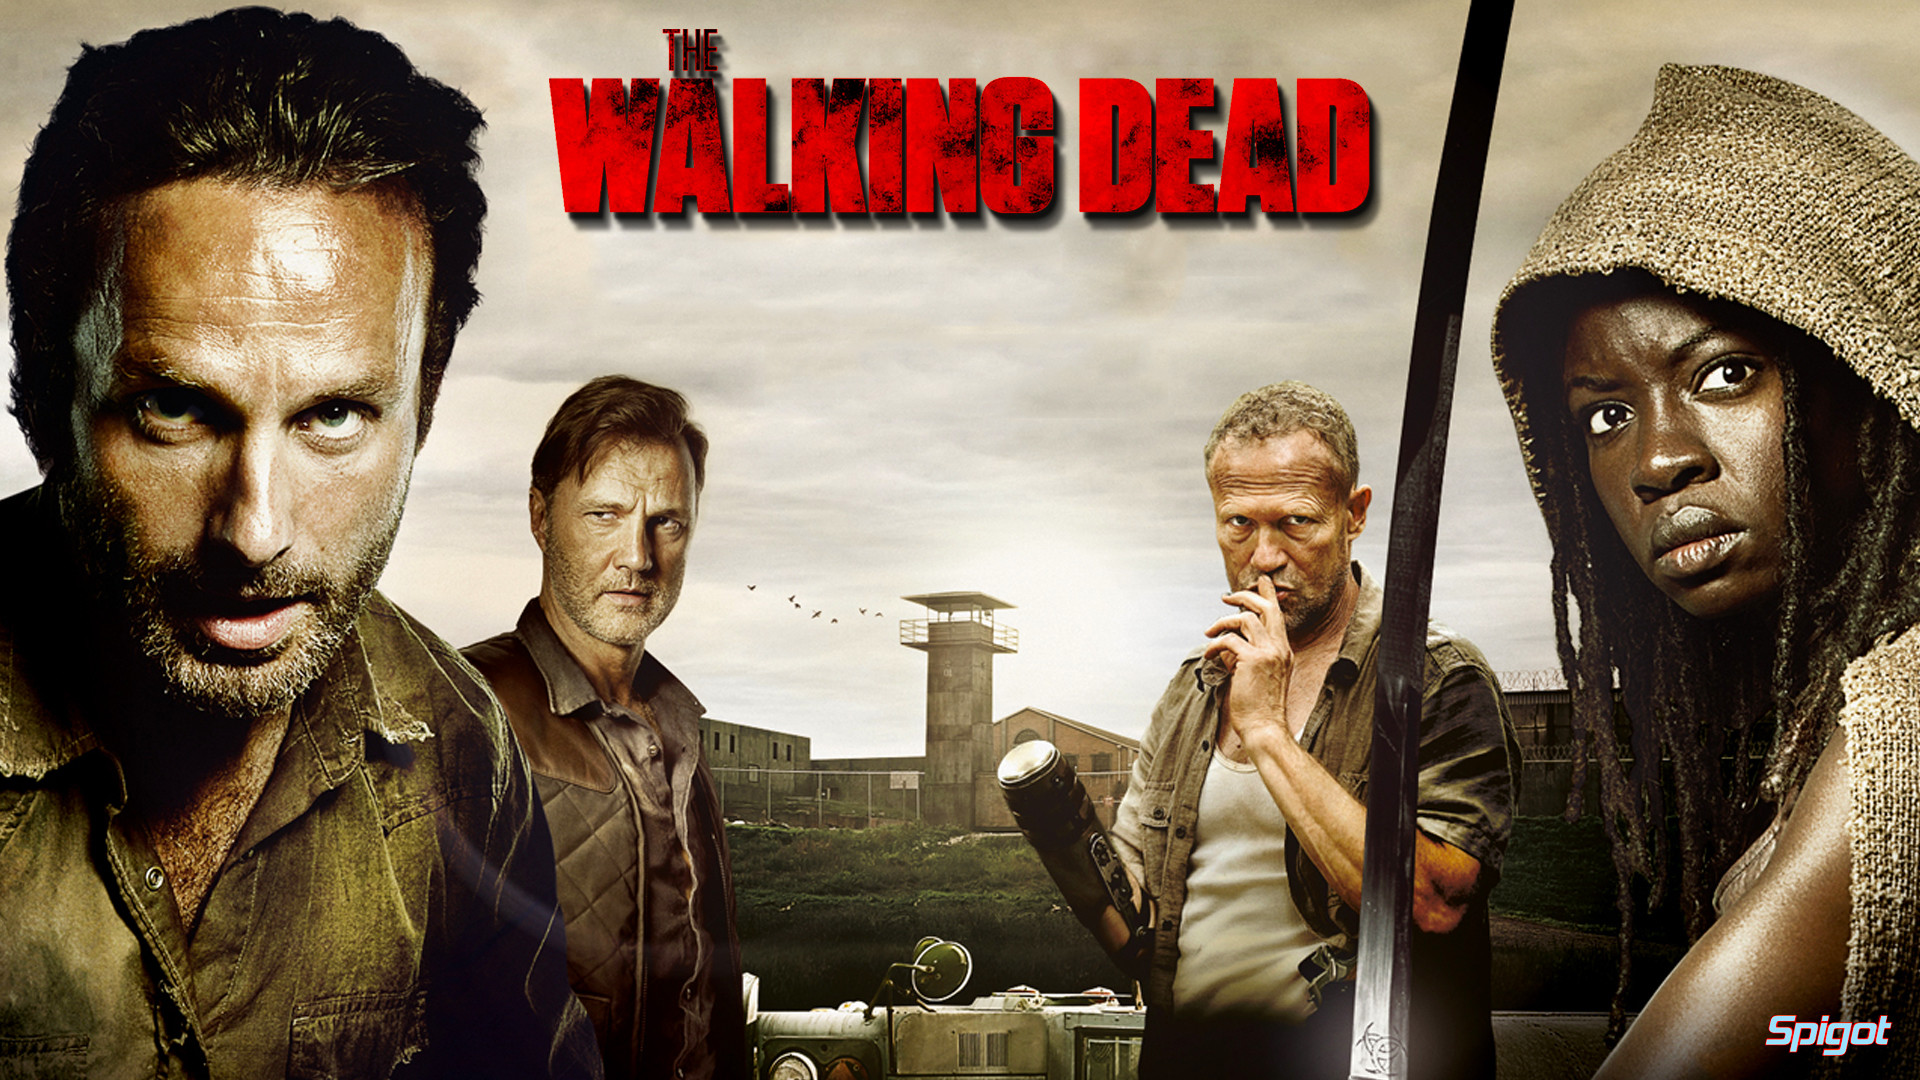 The Walking Dead Wallpaper HD 1080p | ImageBank.biz